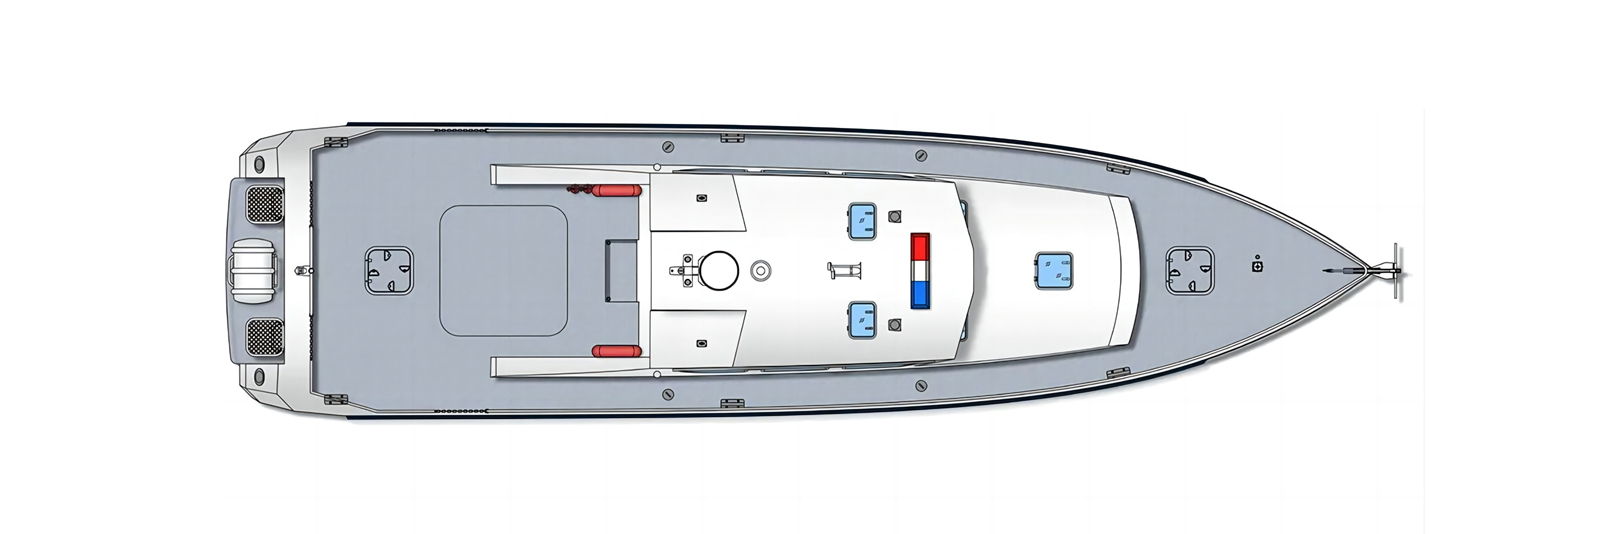 1807 (Hurricane) Coastal Super-high-speed Patrol Boat layout (1)dsl